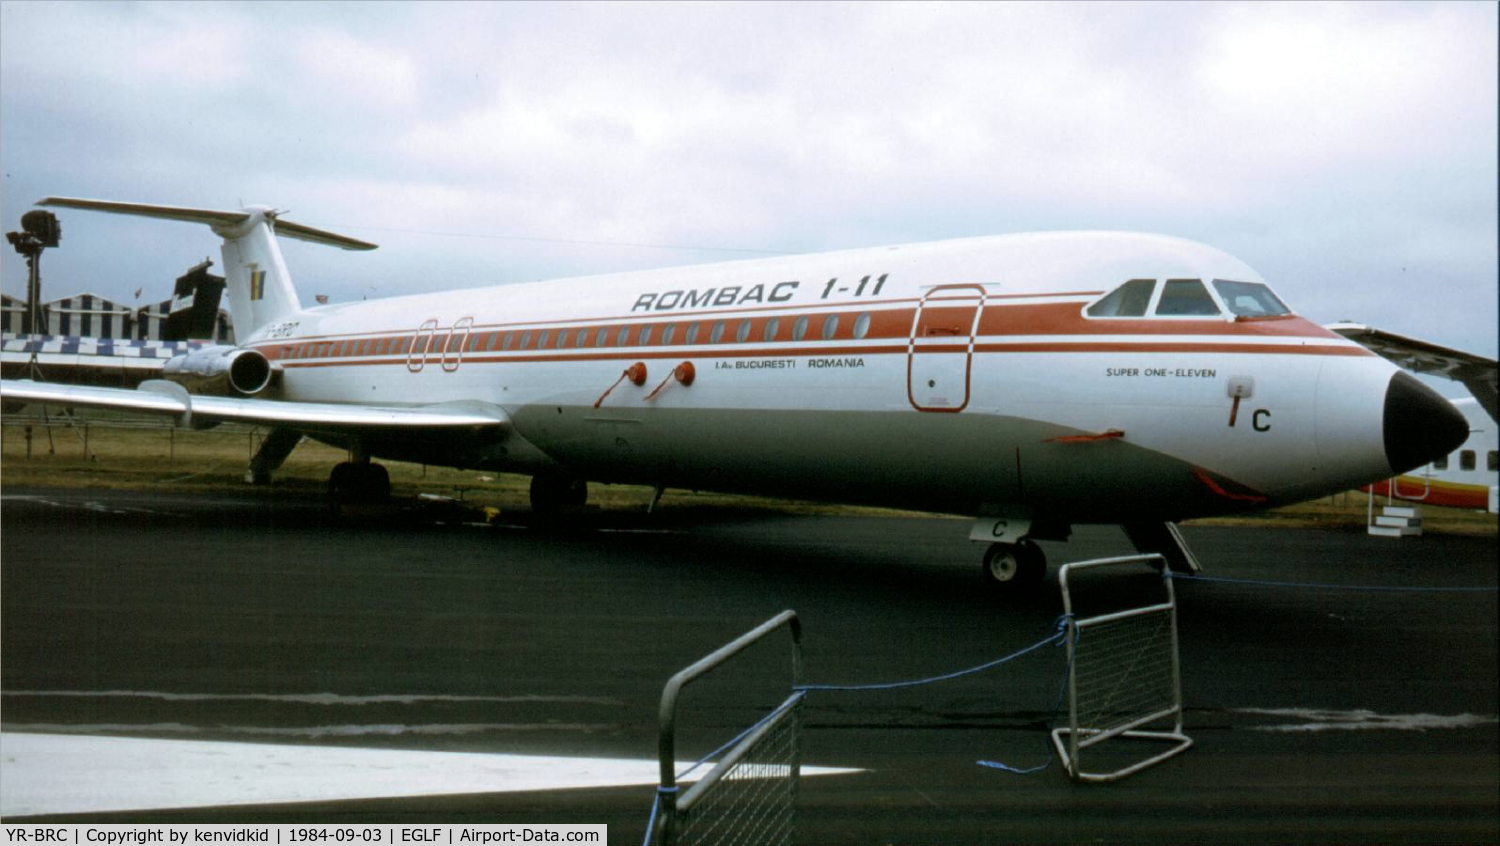 YR-BRC, 1982 Bucuresti Rombac 1-11-561RC One-Eleven C/N 403, At the 1984 Farnborough International Air Show. Scanned from slide.